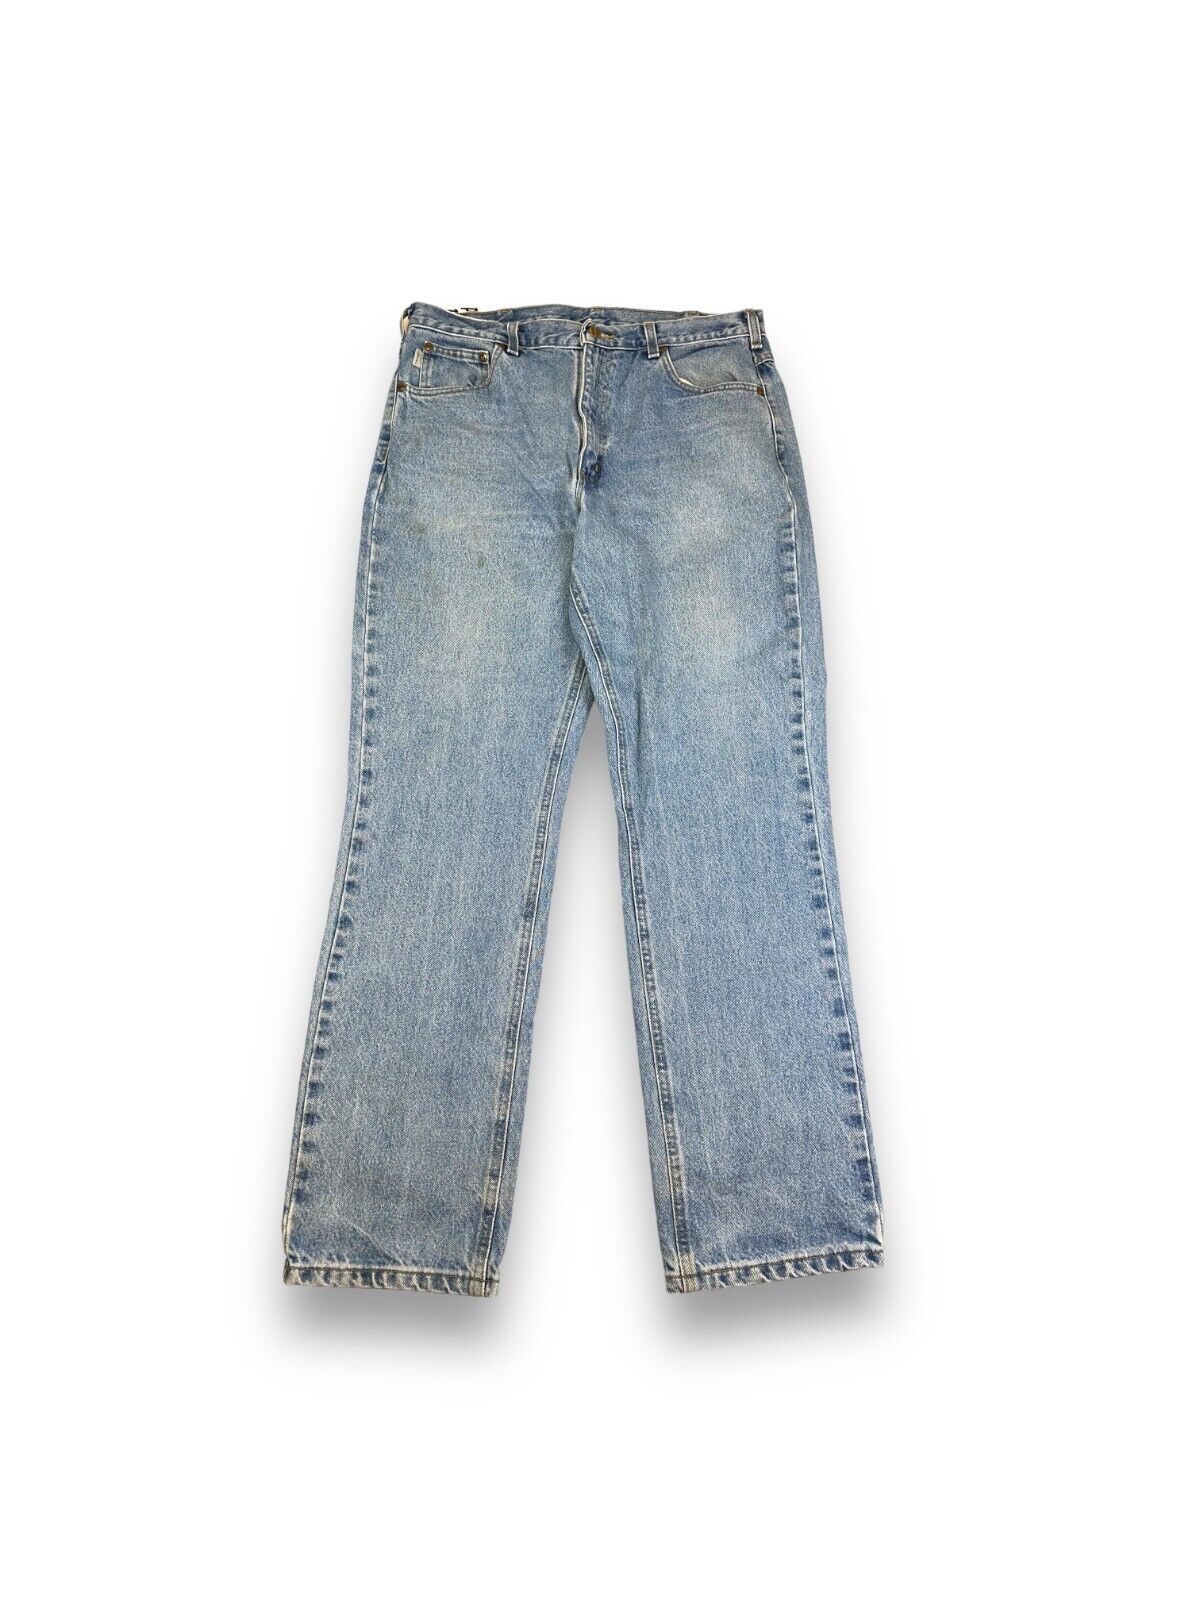 Vintage Carhartt Traditional Fit Light Wash Workwear Denim Pants Size 36W